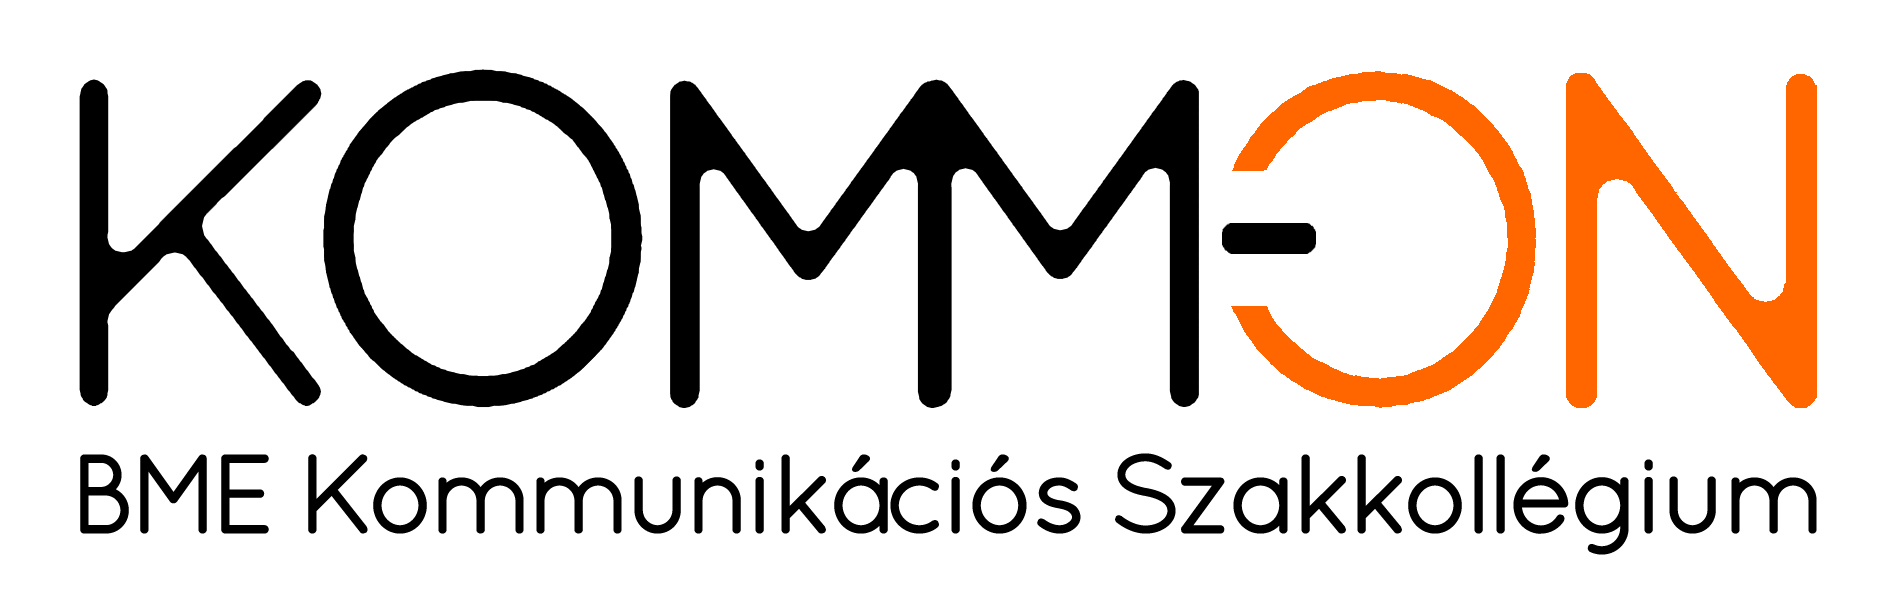 logo_narancs_f.jpg